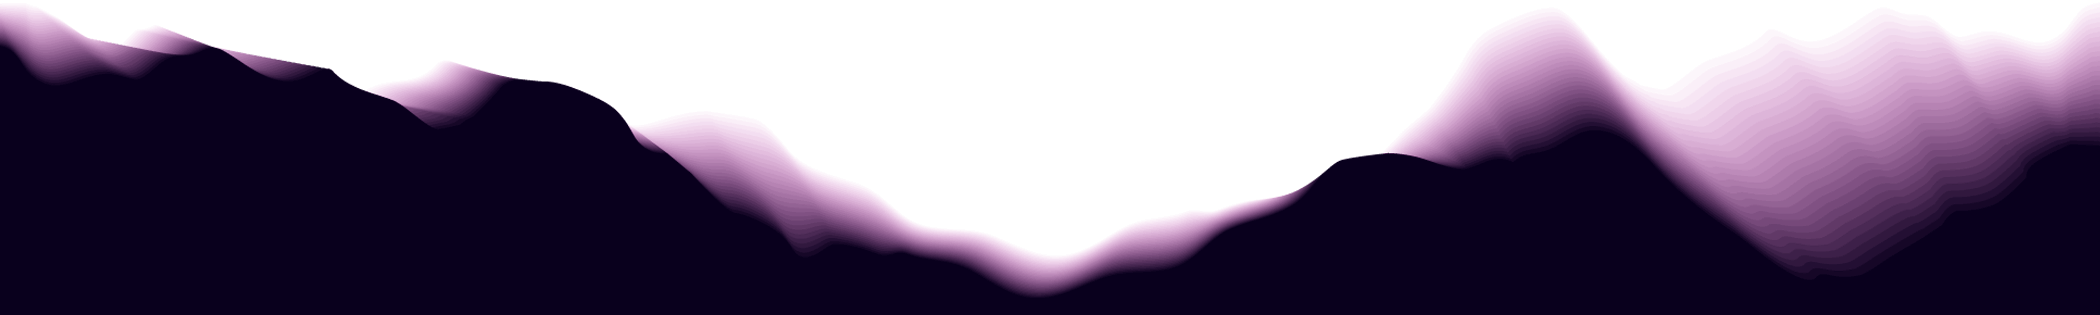 http://sanjaibranka.com/wp-content/uploads/2018/05/purple_top_divider.png